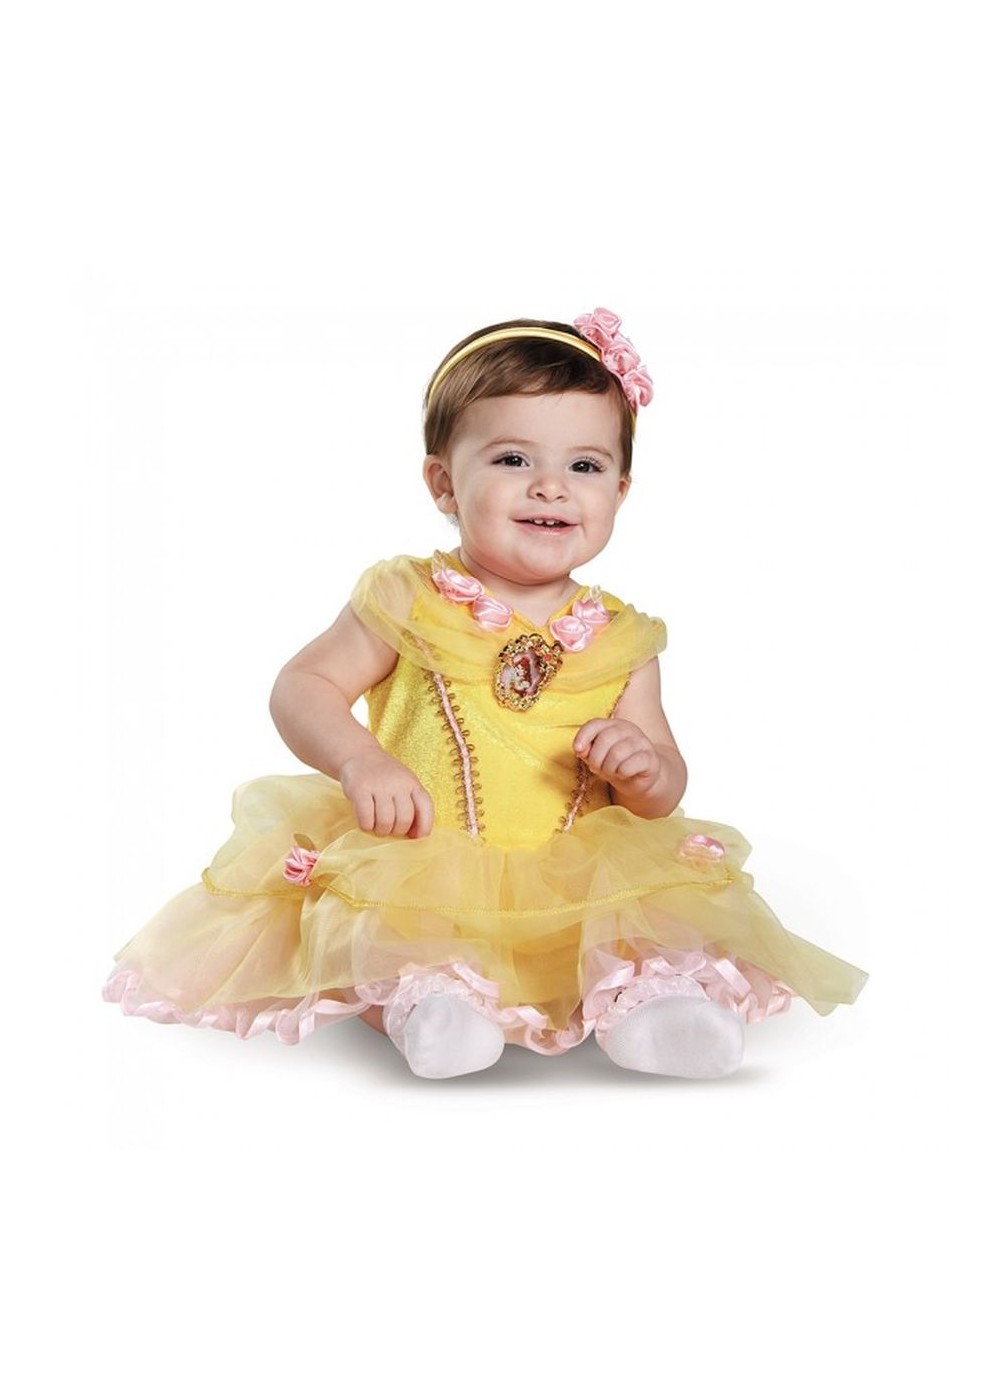 Baby Belle Infant Costume Deluxe